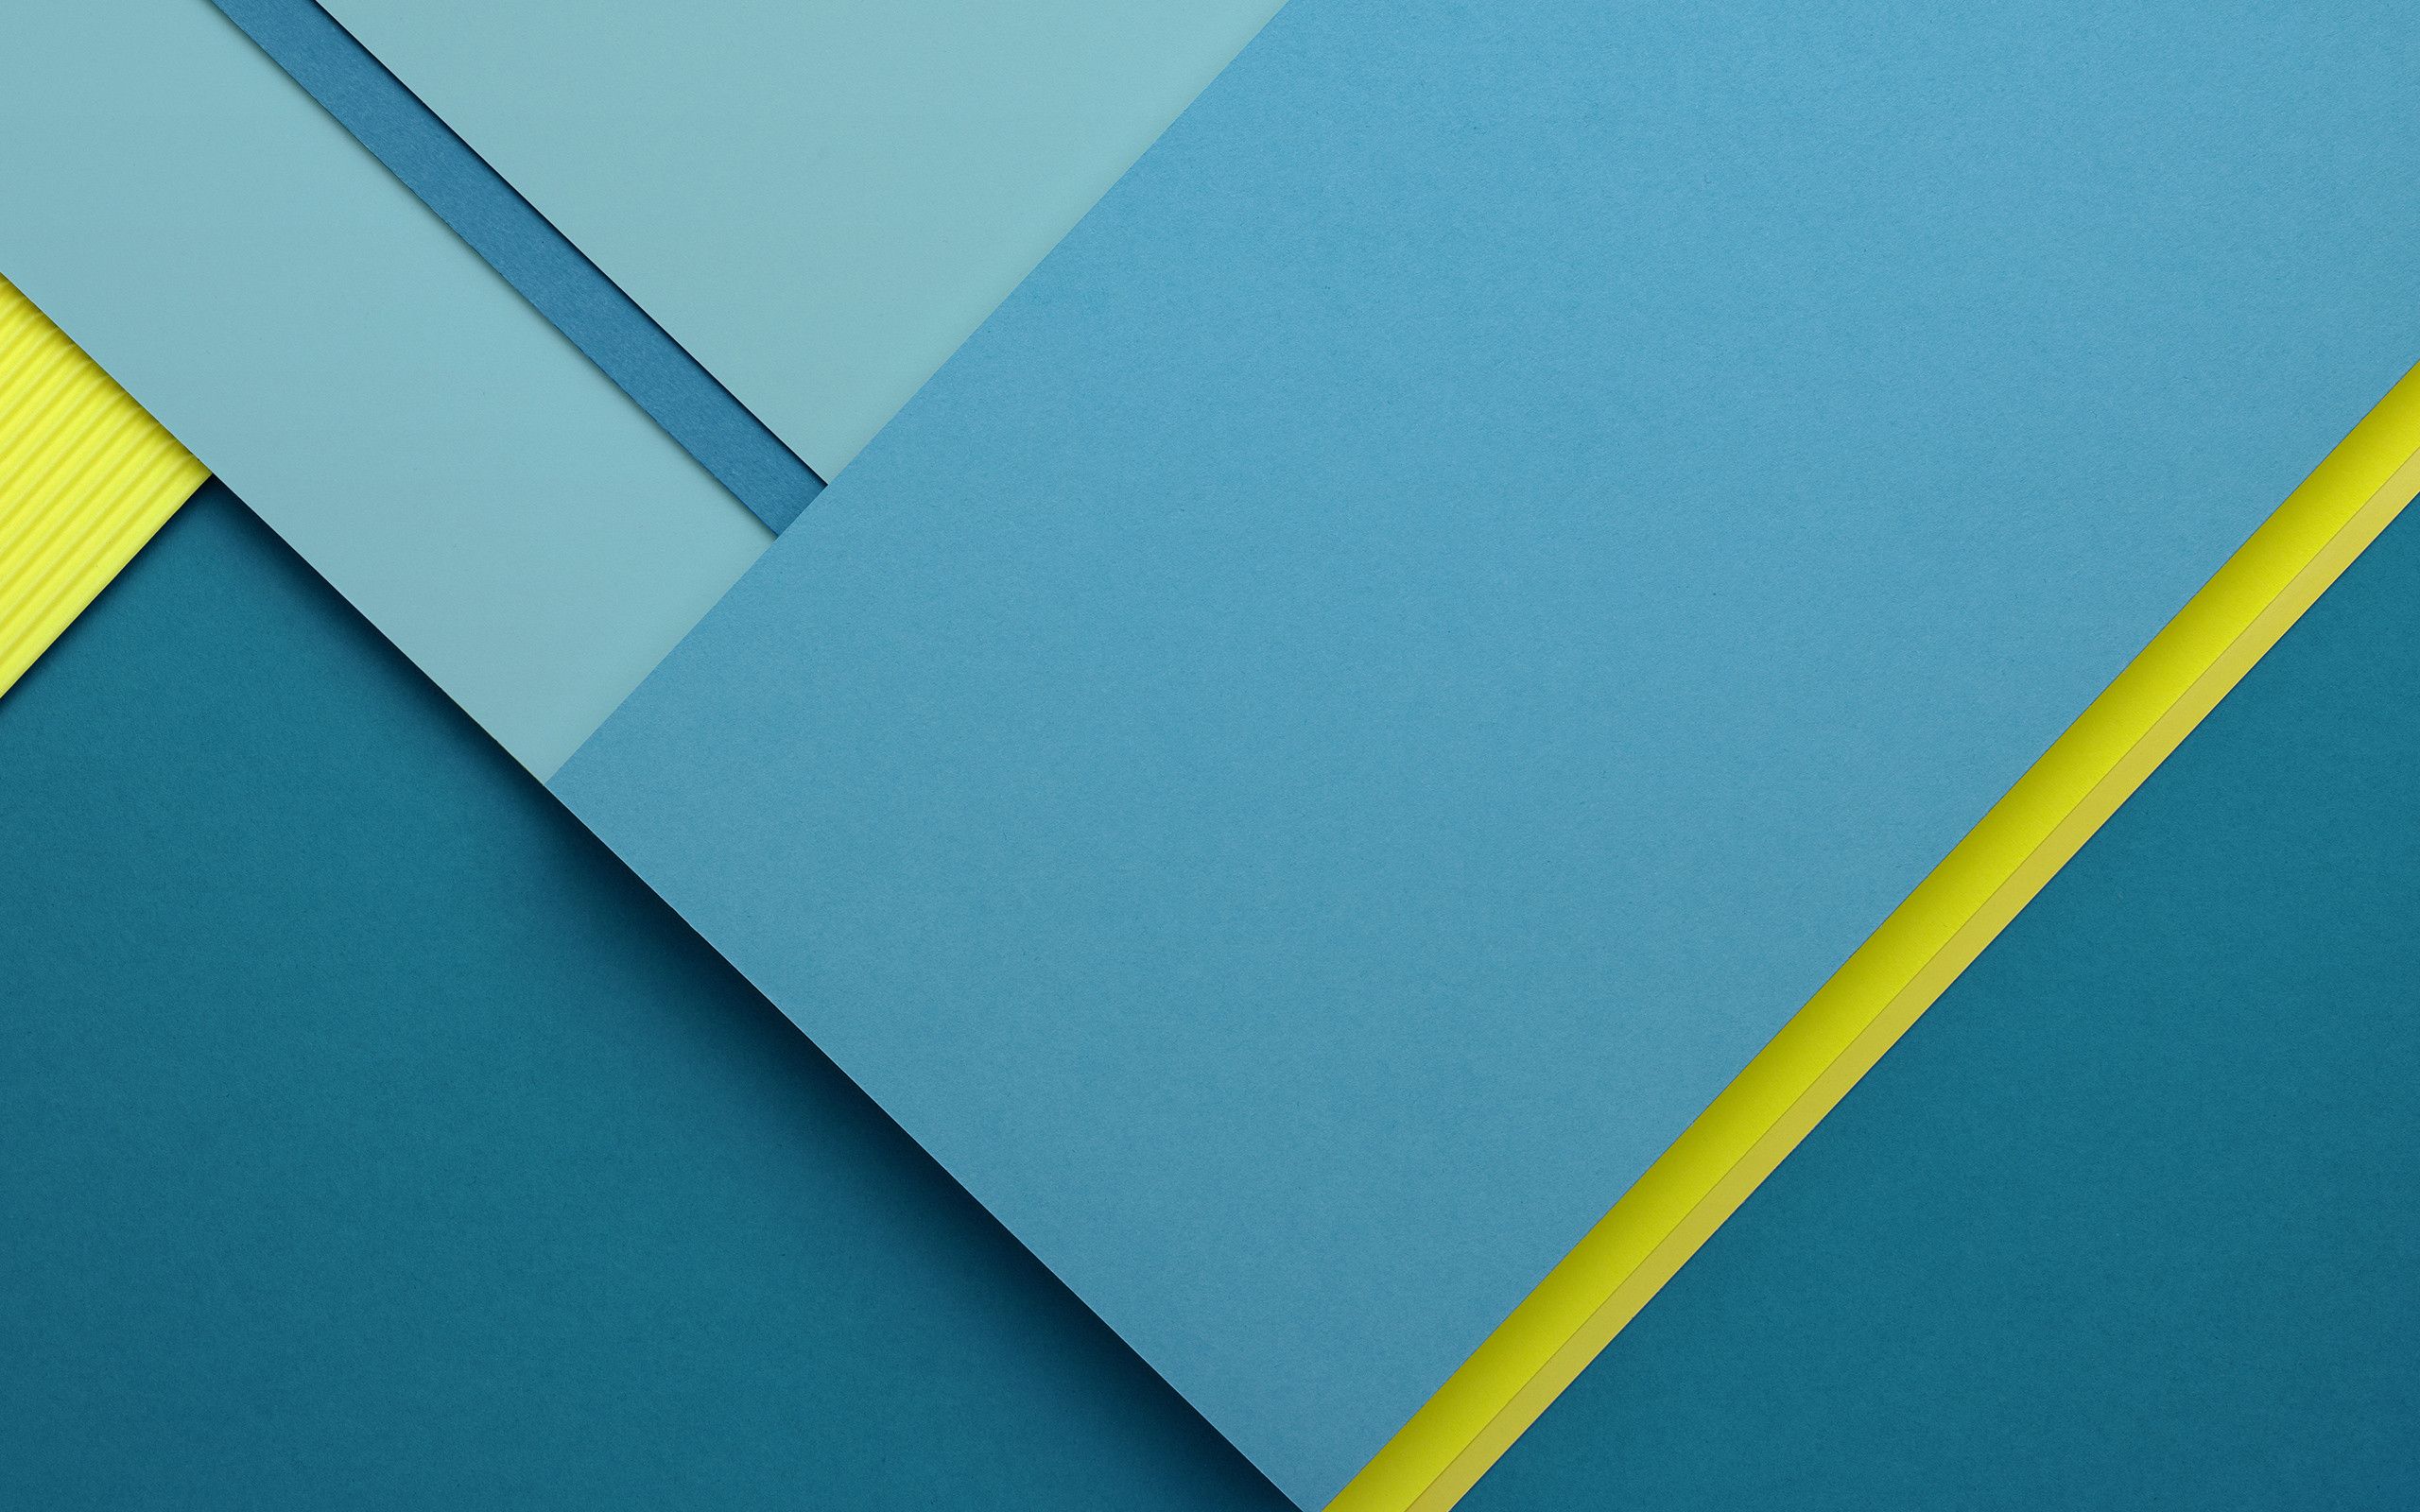 The New Material Design Default Wallpaper for Chrome OS